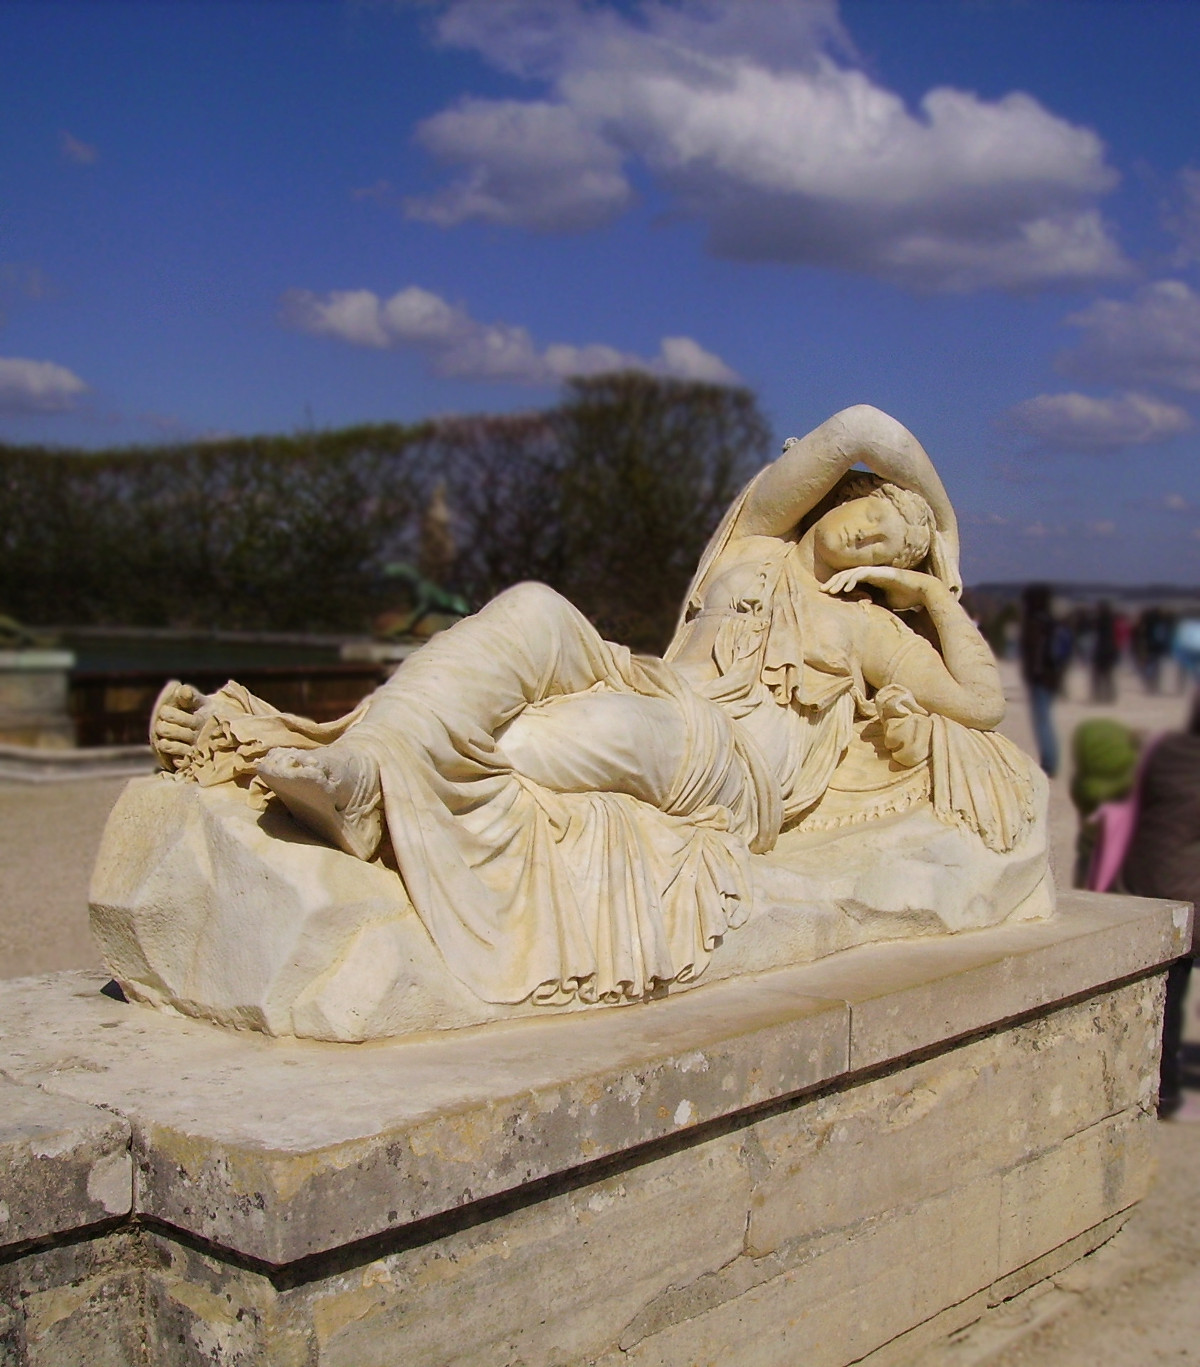 Daydreaming Ariadne at Versailles. Credit Yair Haklai